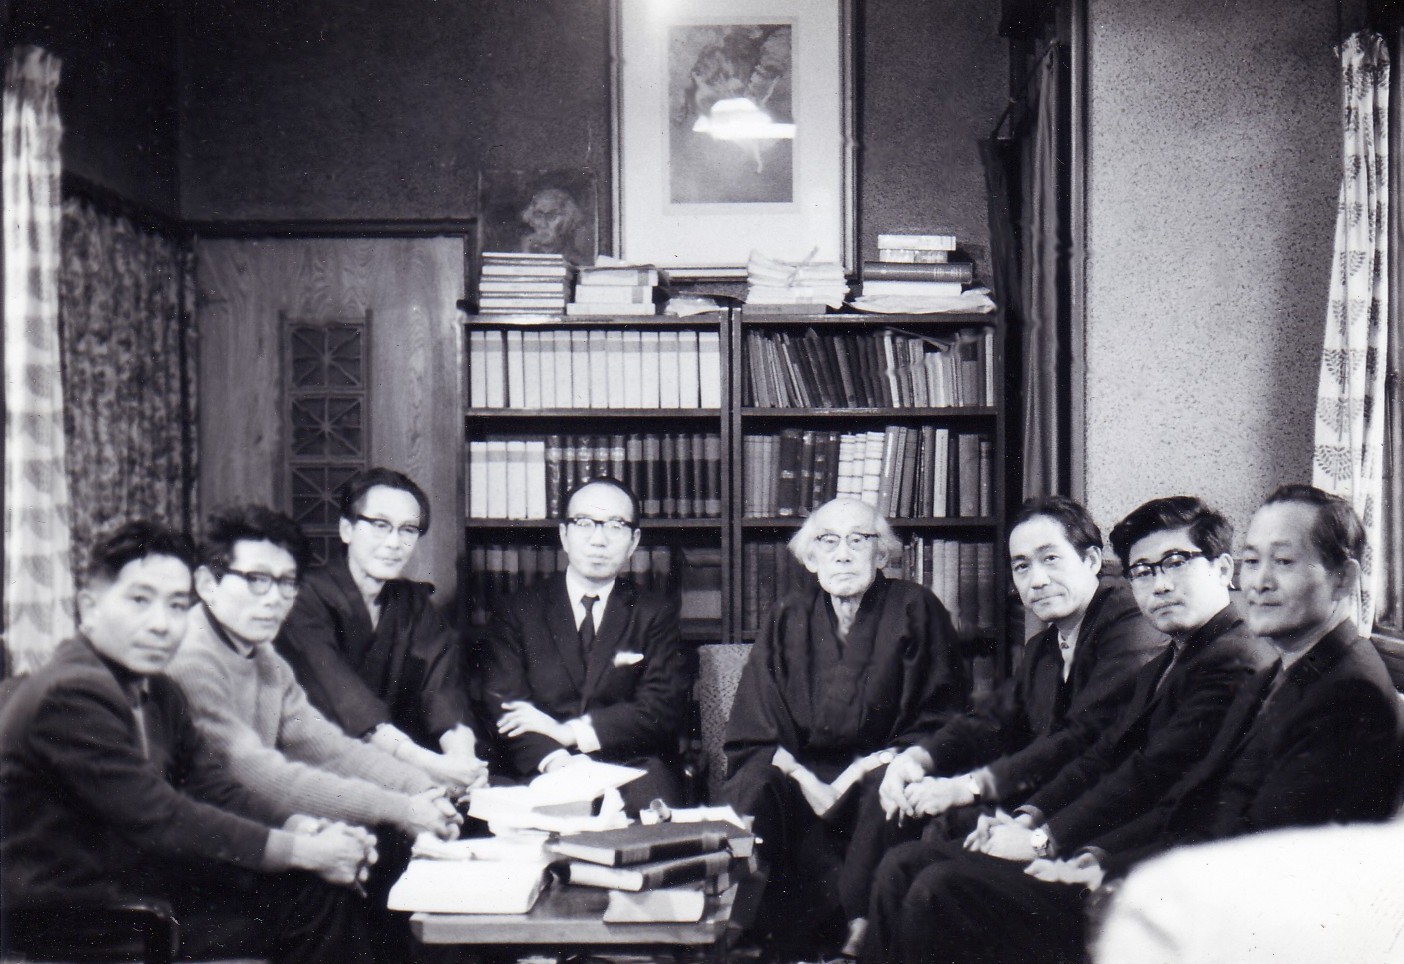 A photograph of the lexicon editors